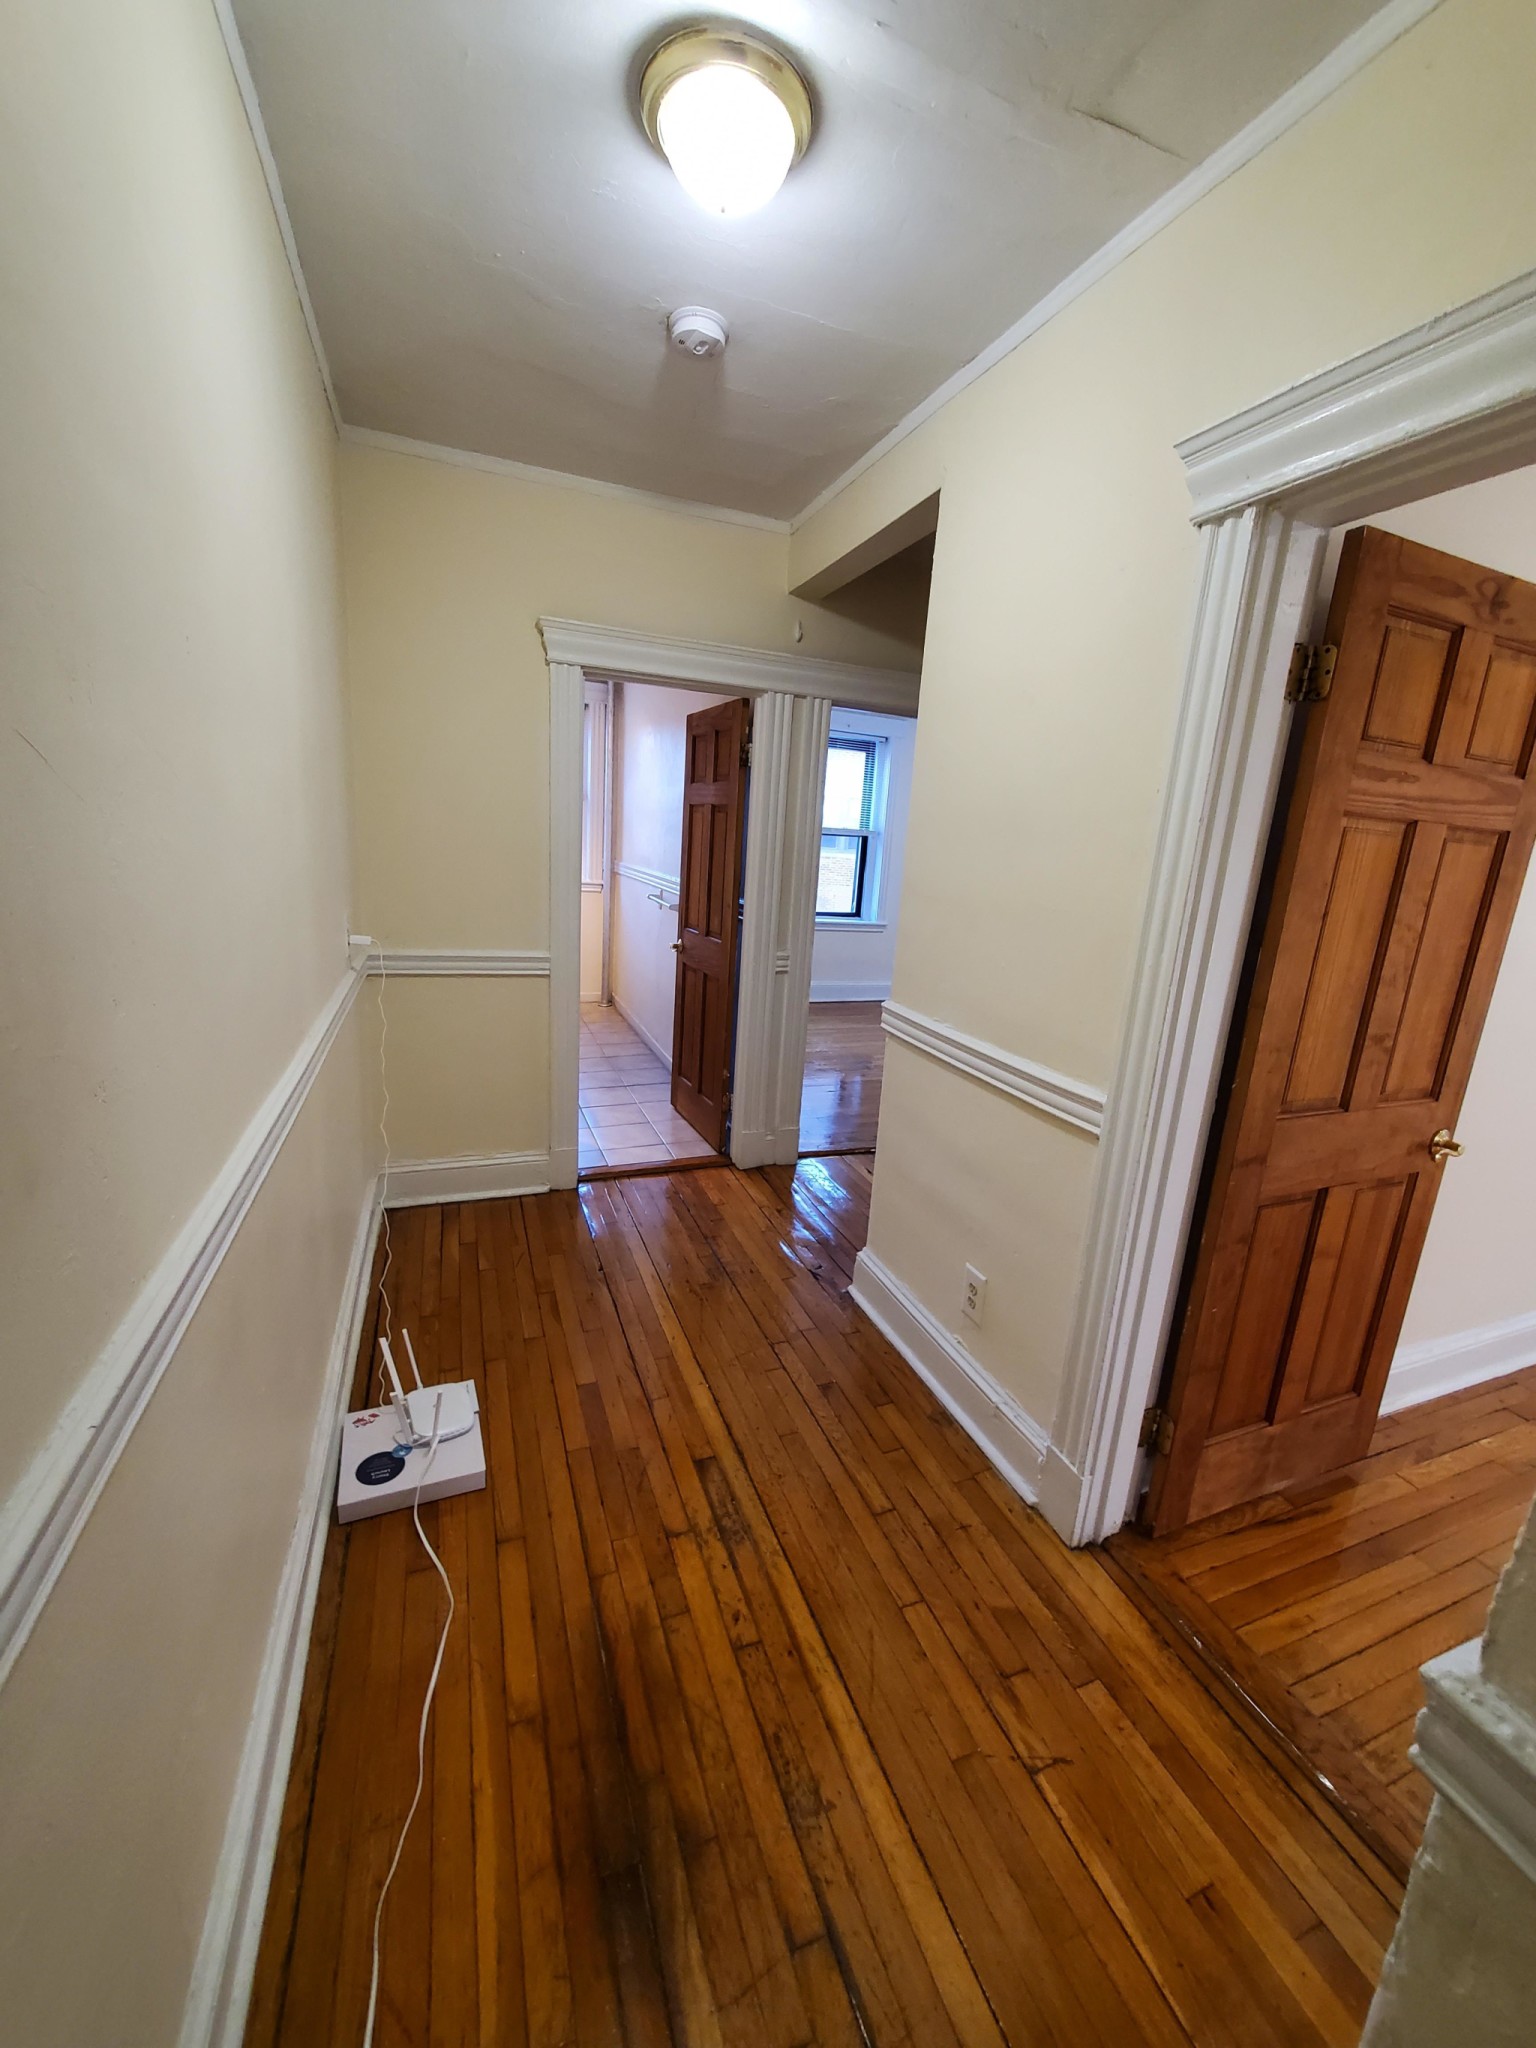 Photos of apartment on Gloucester,Boston MA 02115